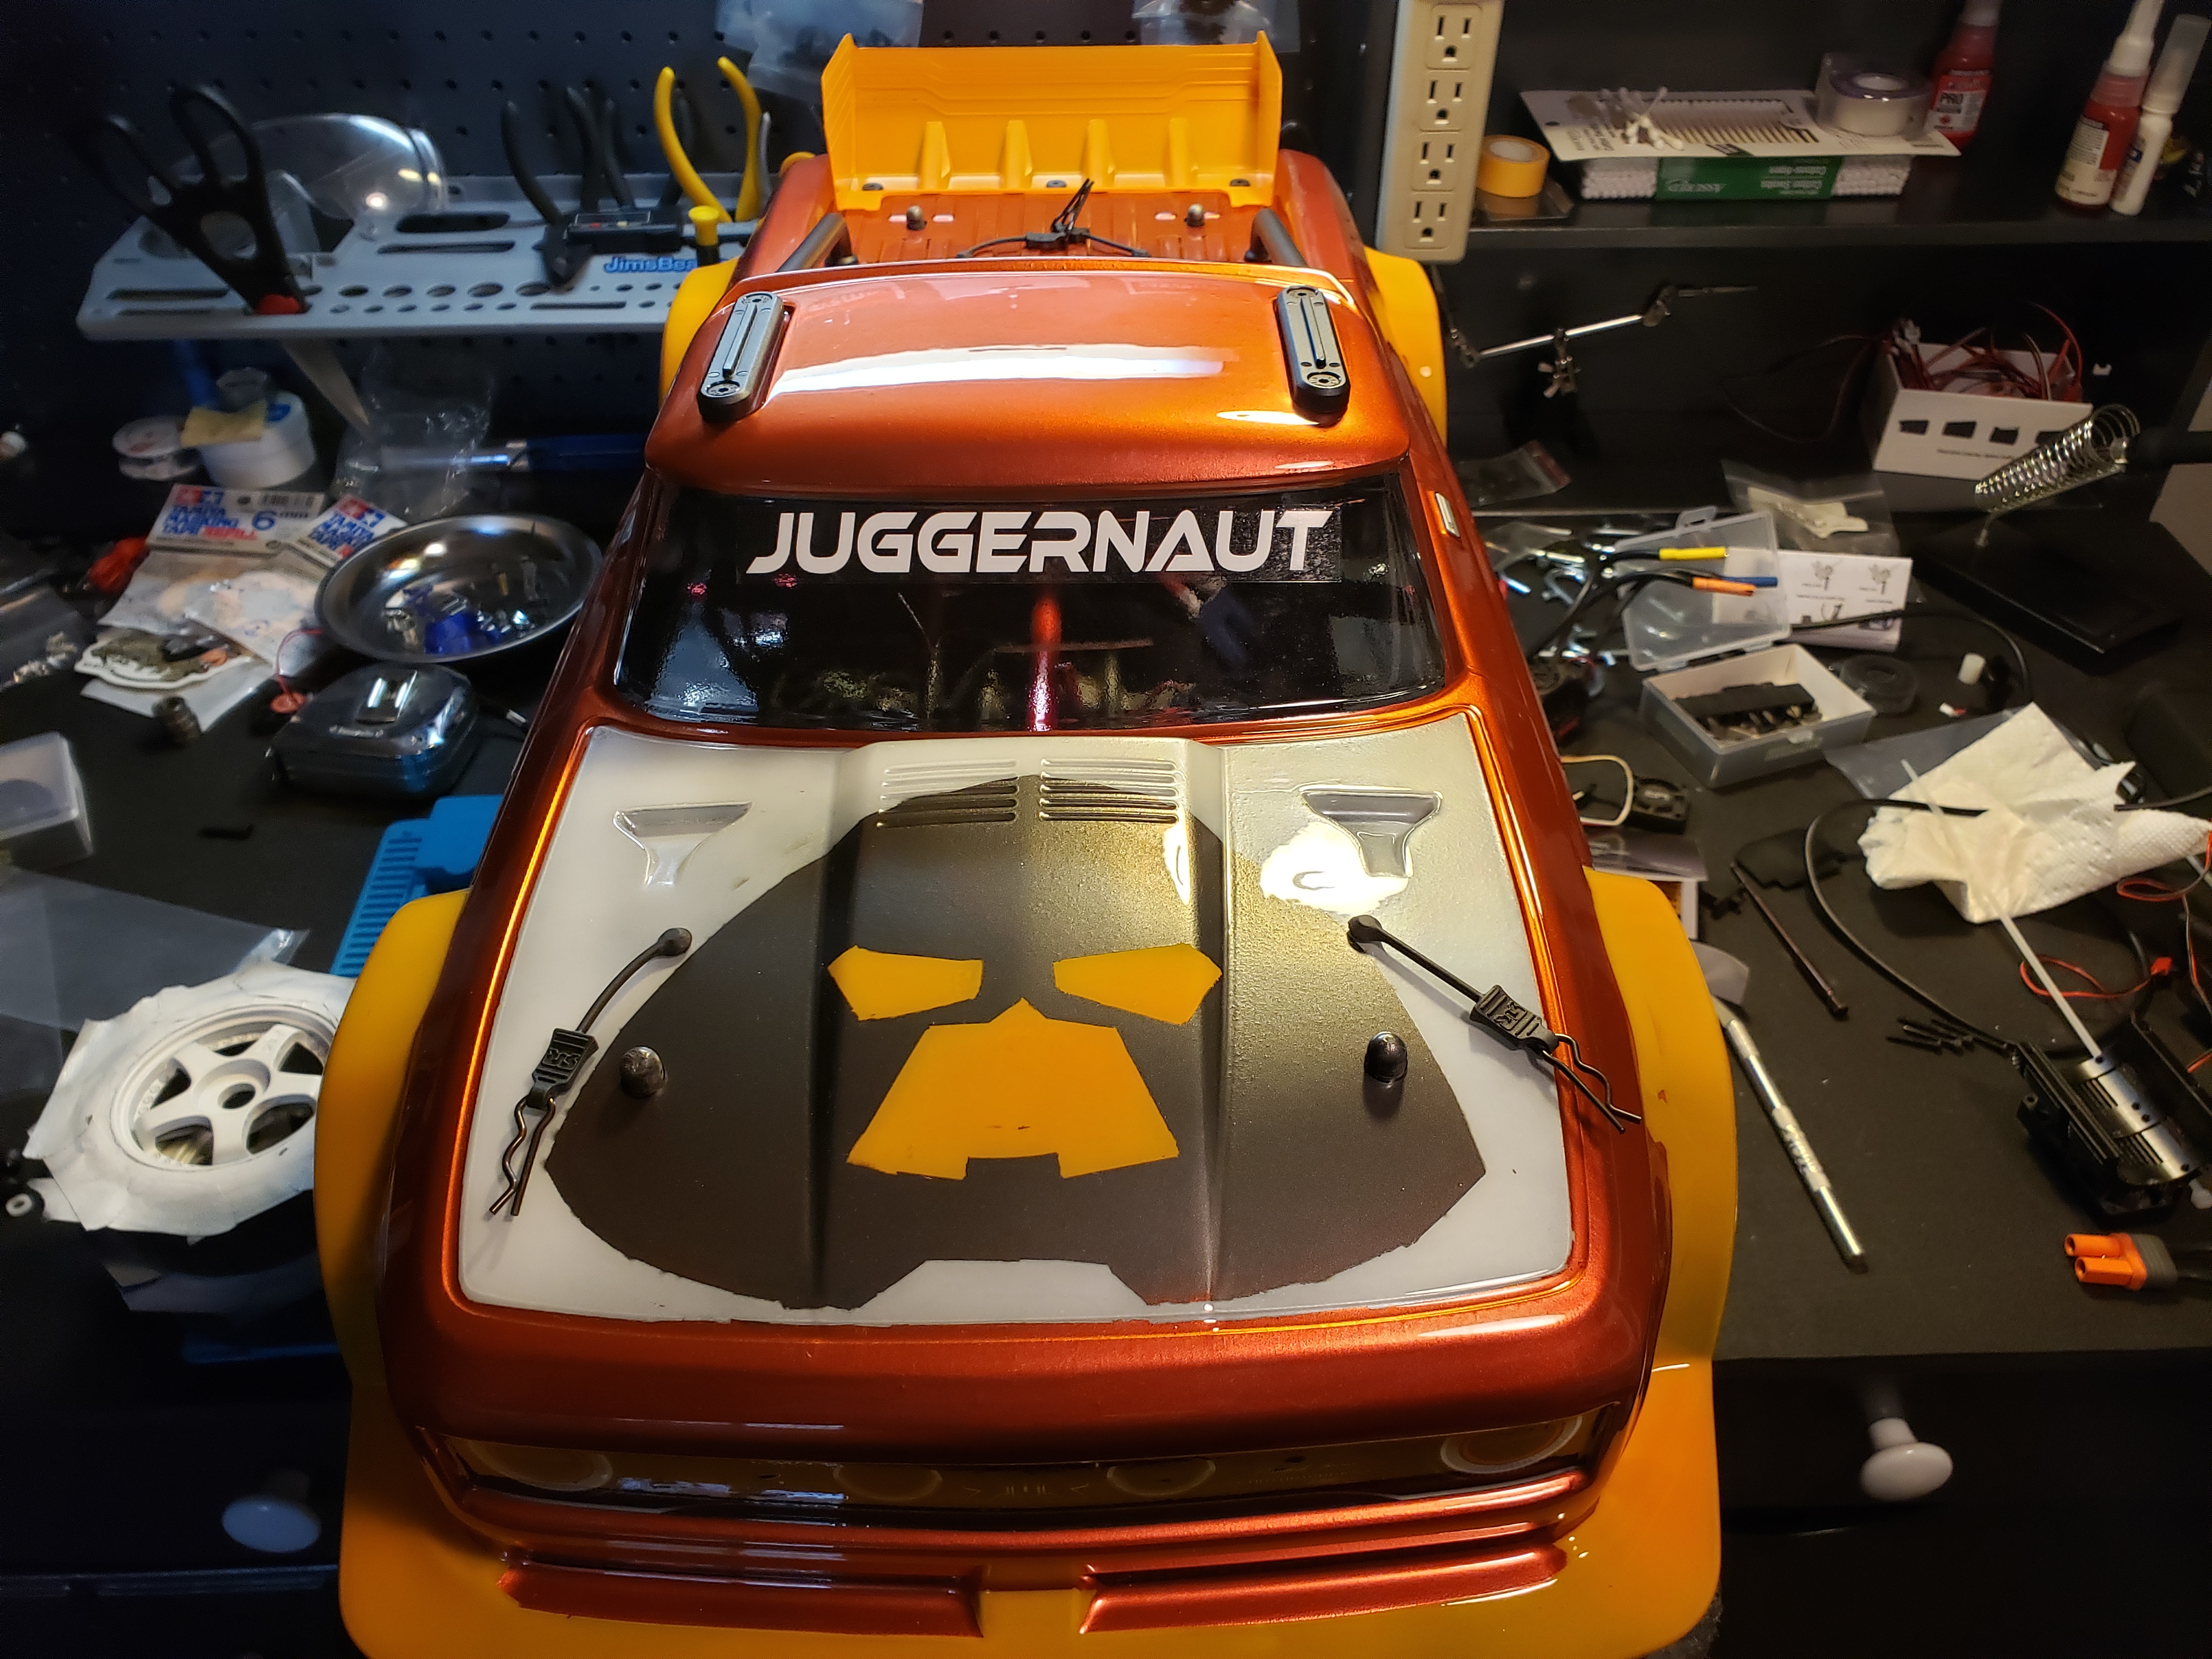 Juggernaut build front 2.jpg